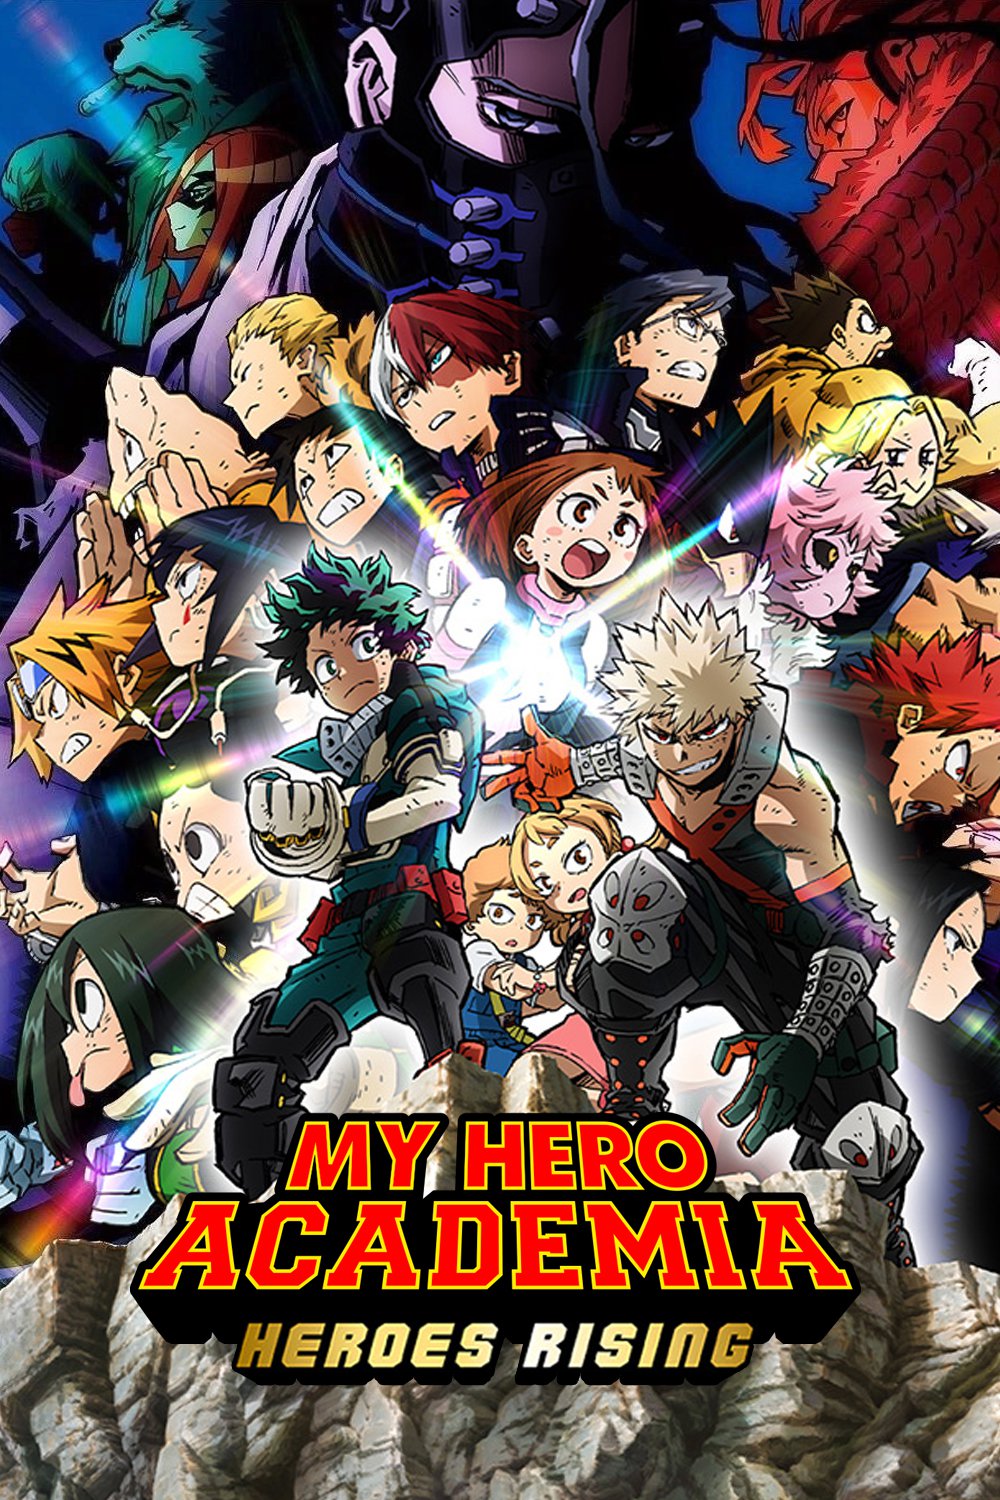 My Hero Academia - Boku no hîrô akademia THE MOVIE - Heroes: Rising - Where Can I Watch The New My Hero Movie